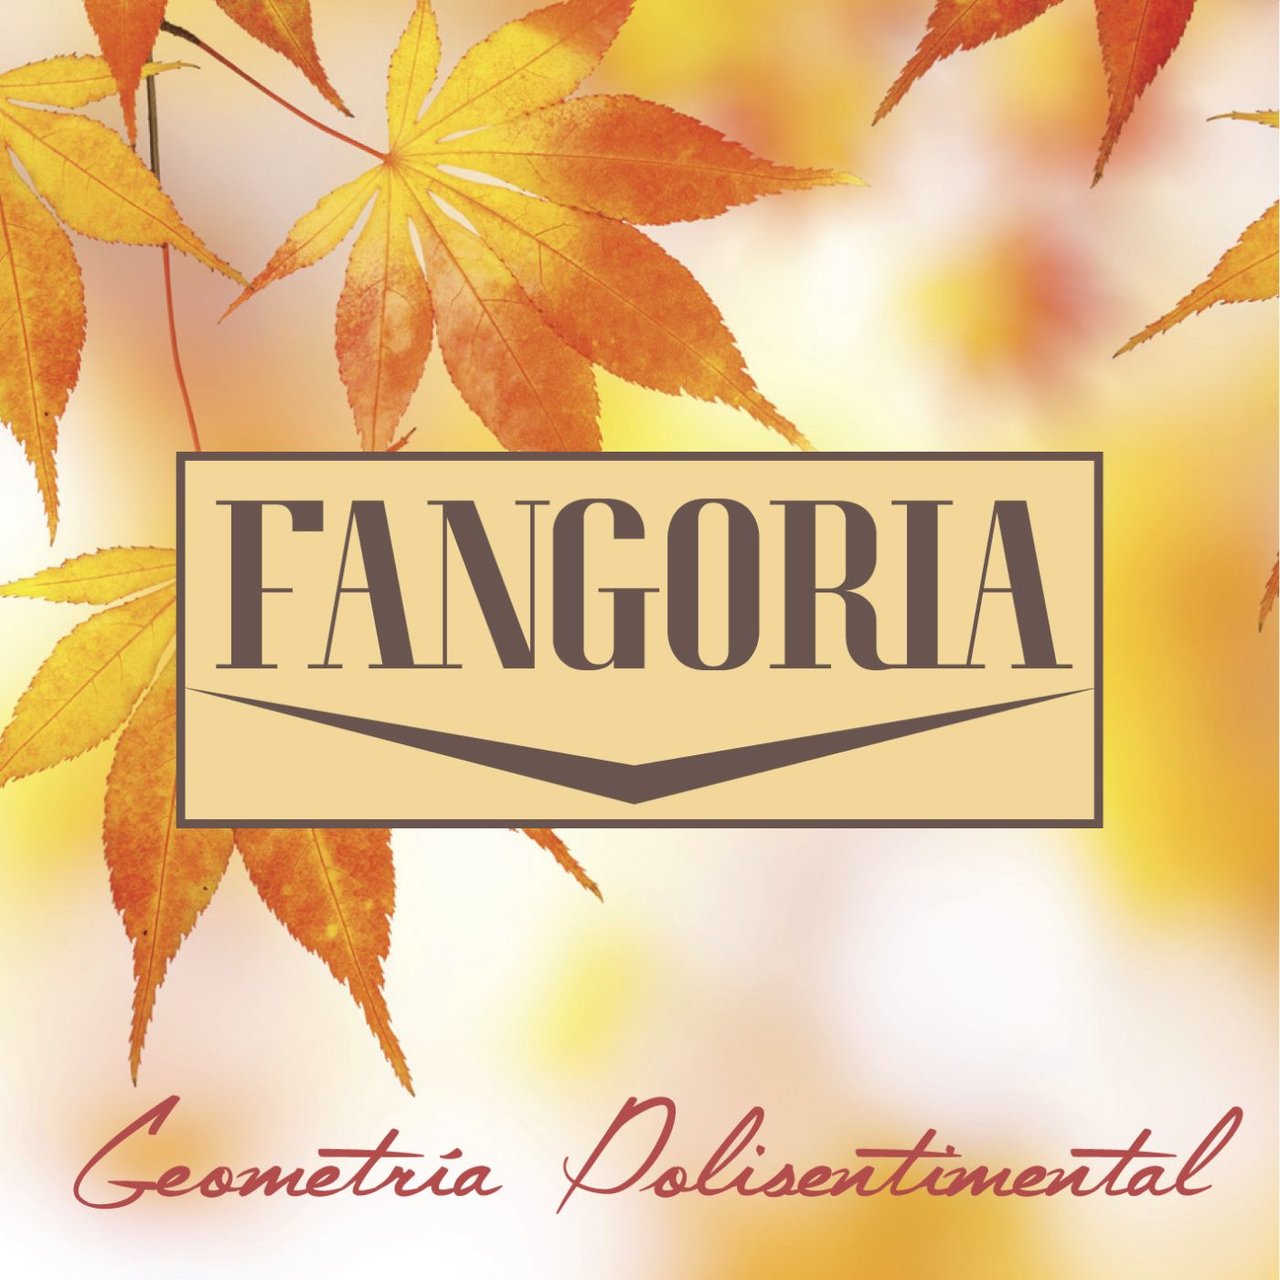 Fangoria — Geometría polisentimental cover artwork